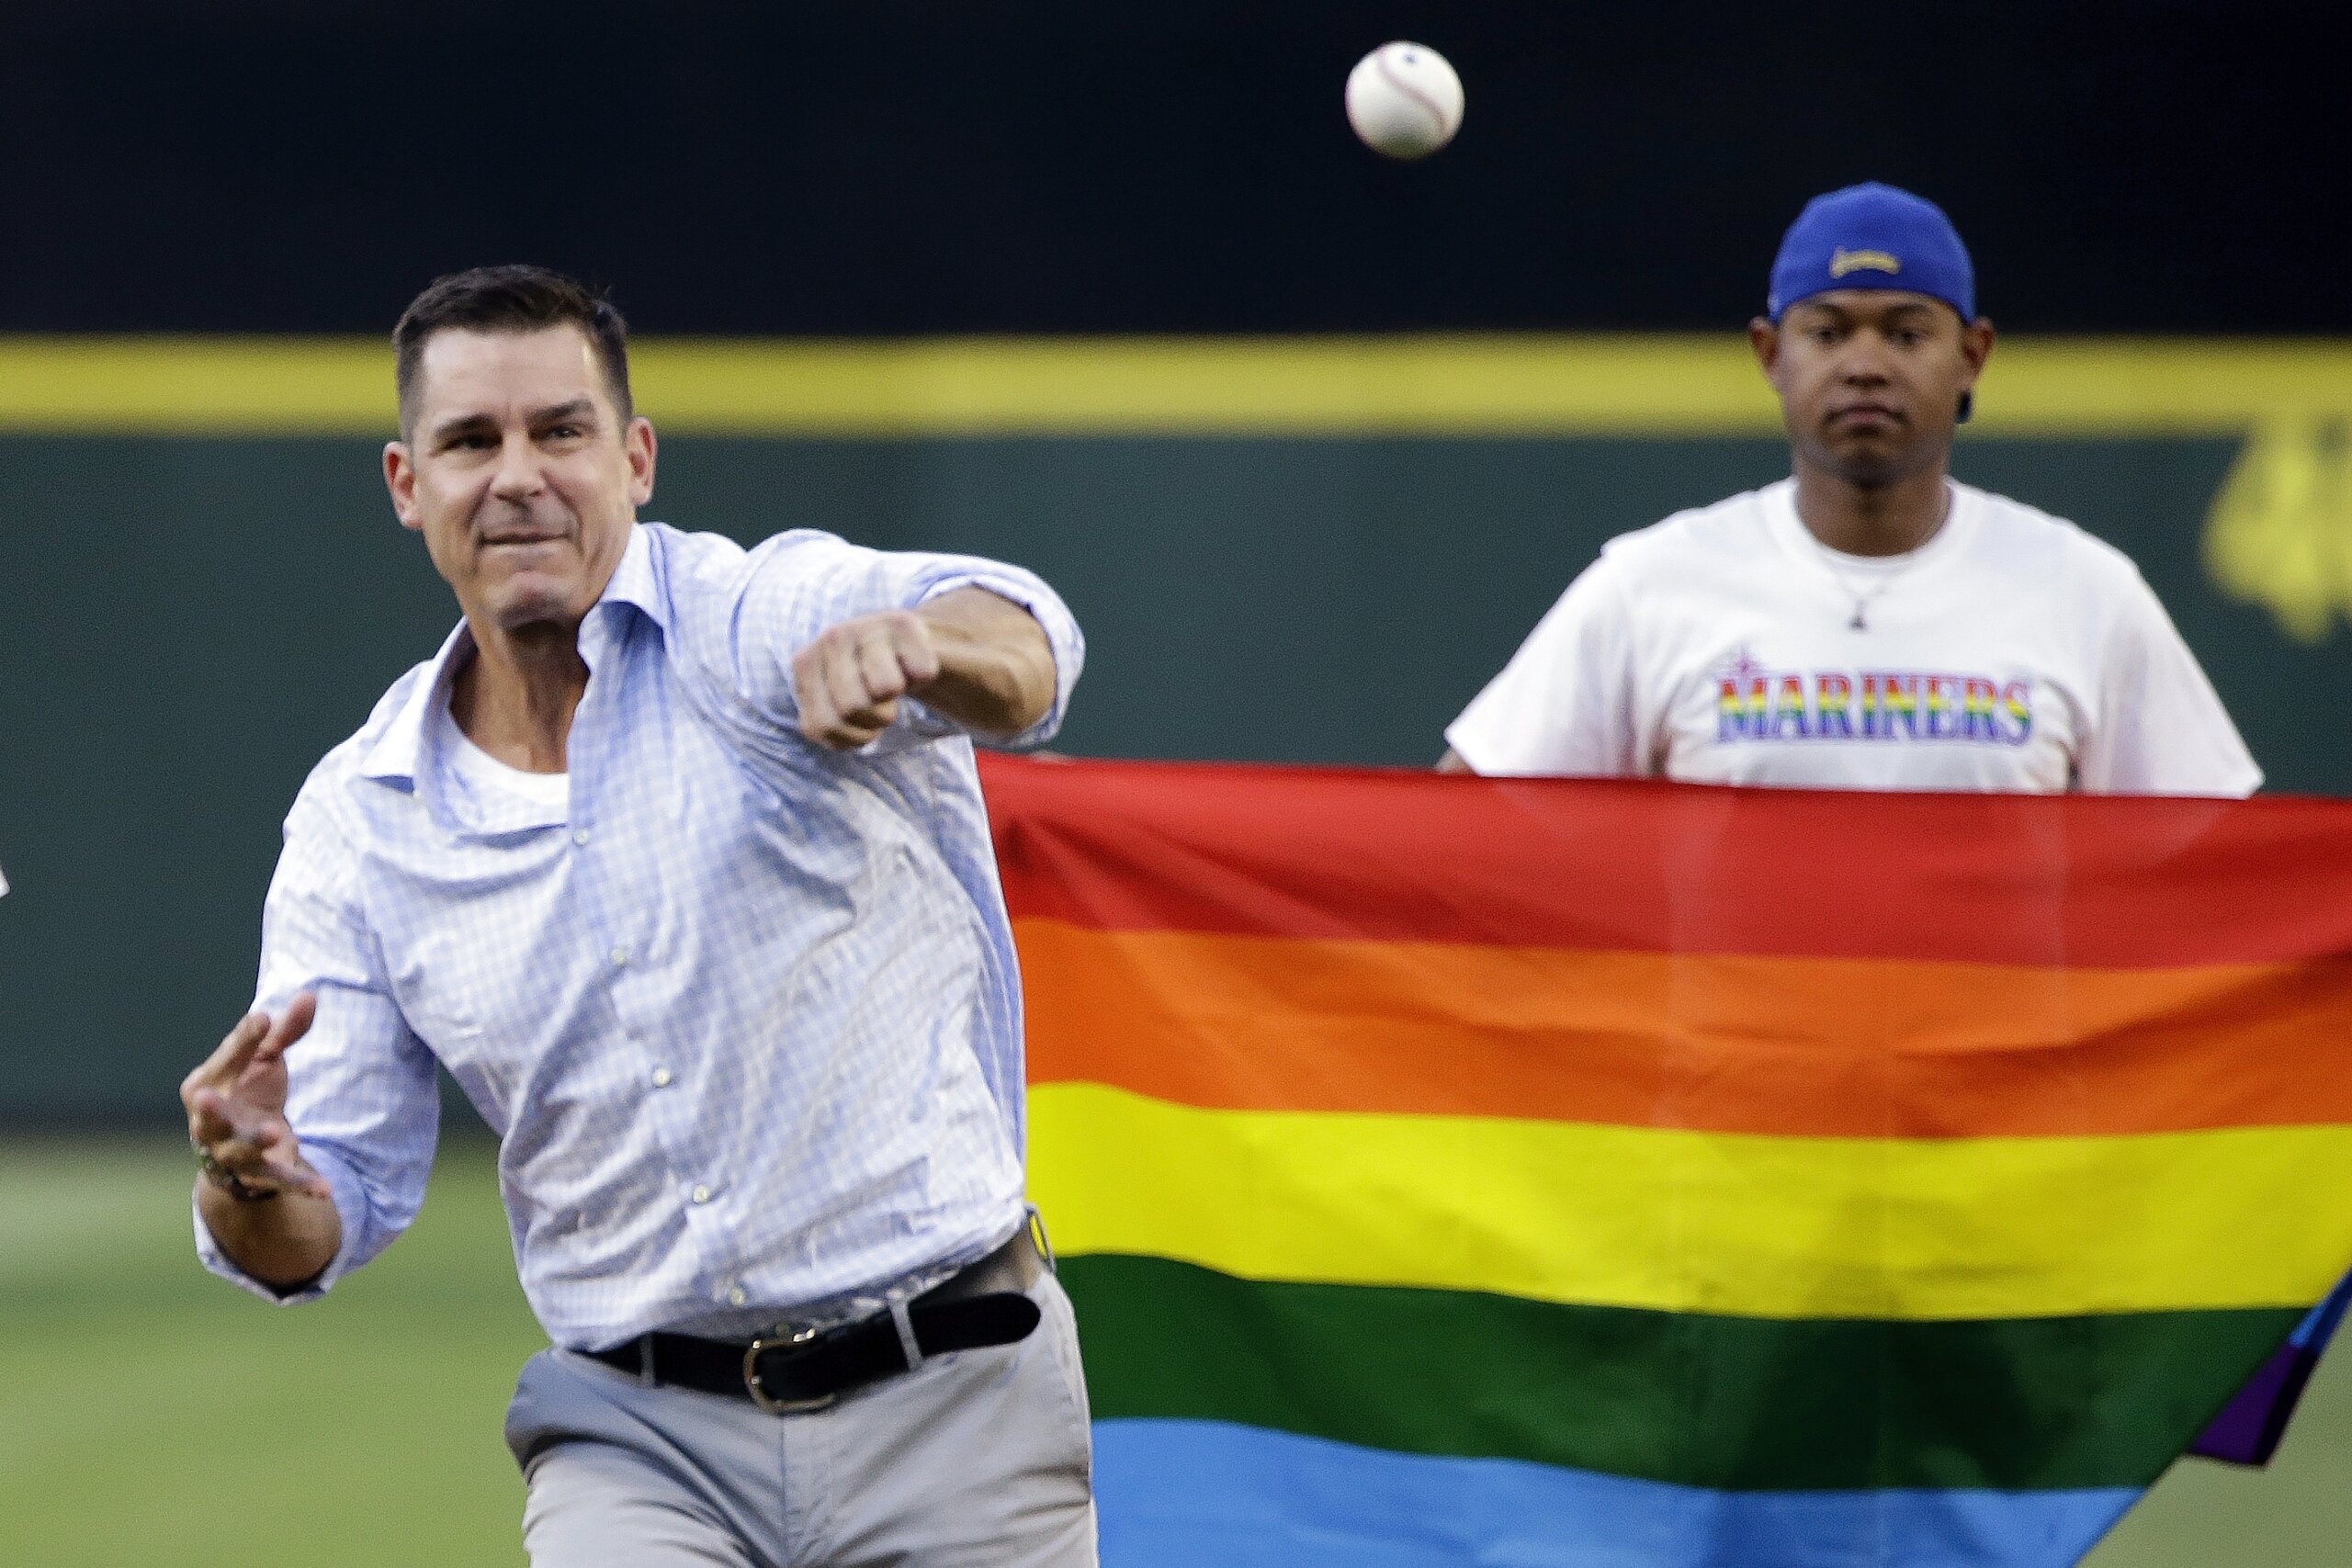 Major League Baseball discourages Pride Night logos on uniforms